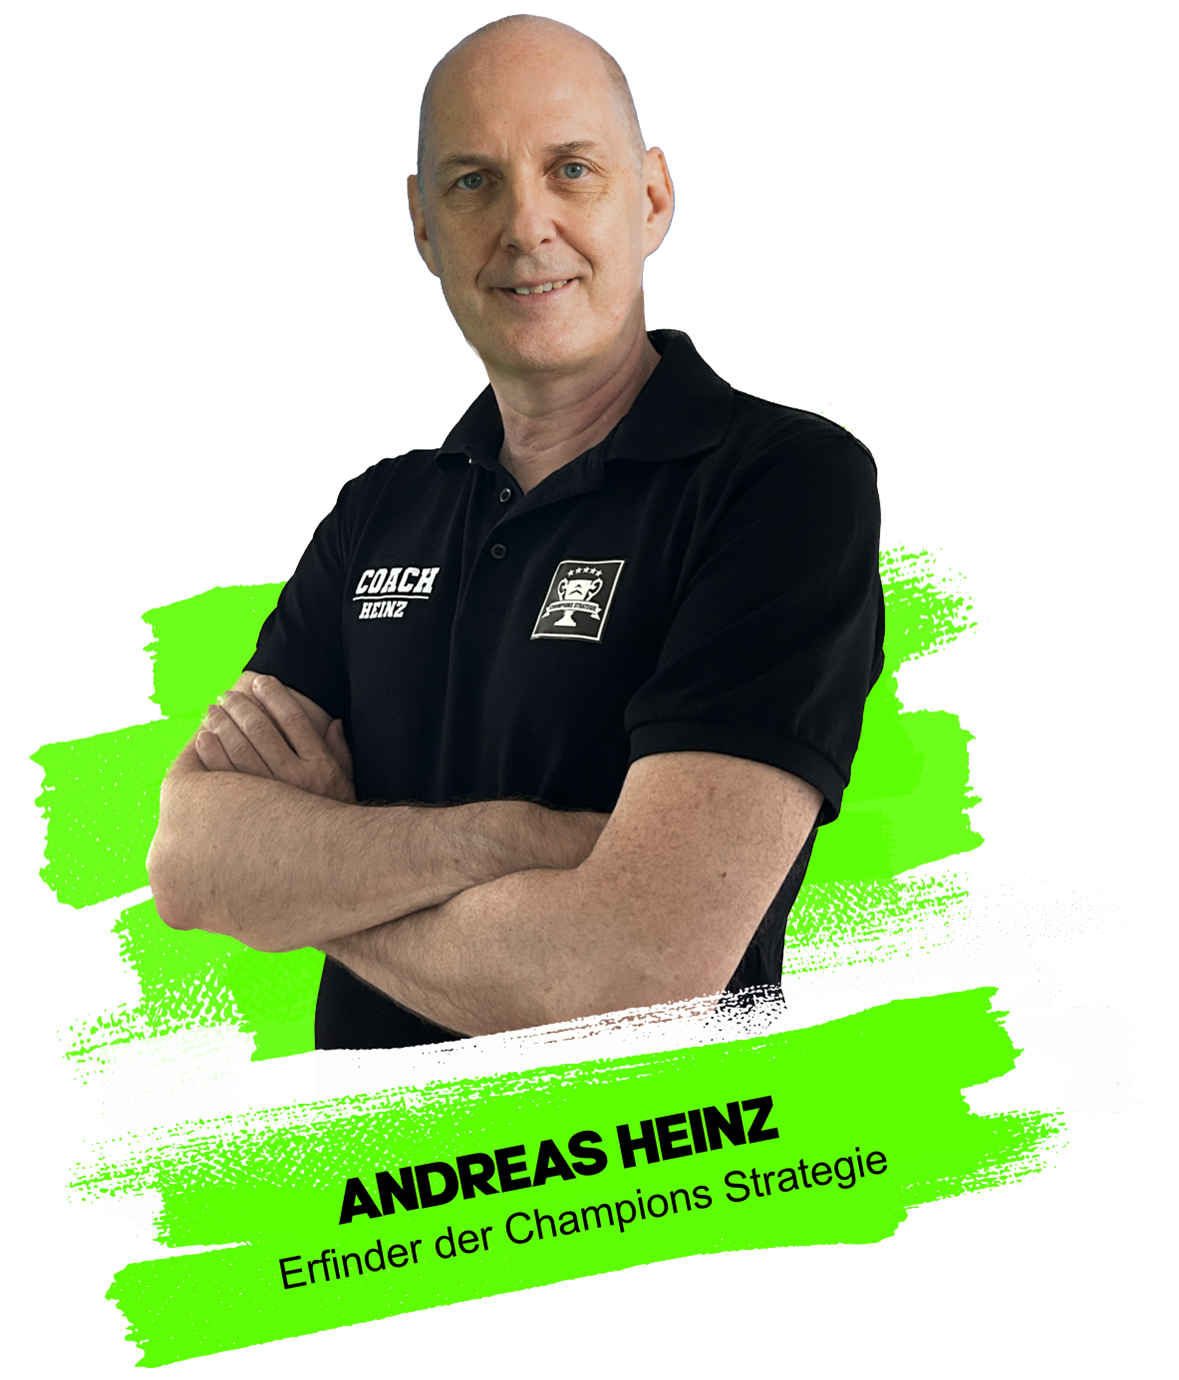 Andreas Heinz